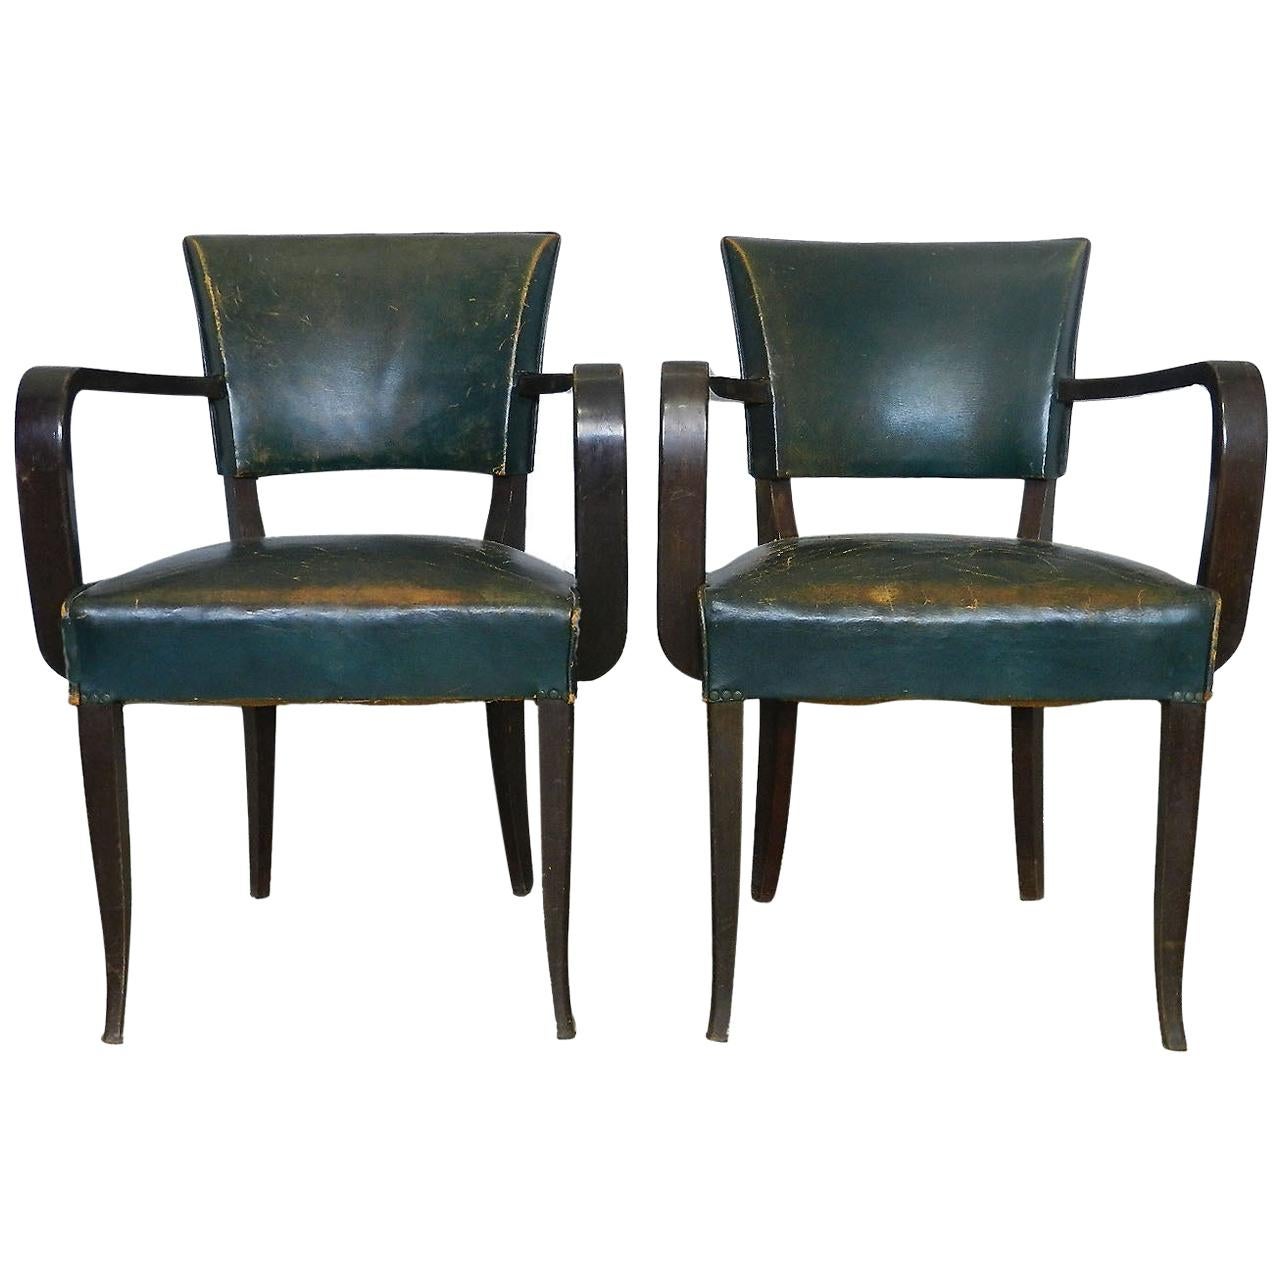 Pair of Bridge Chairs Leather French Art Deco, circa 1930